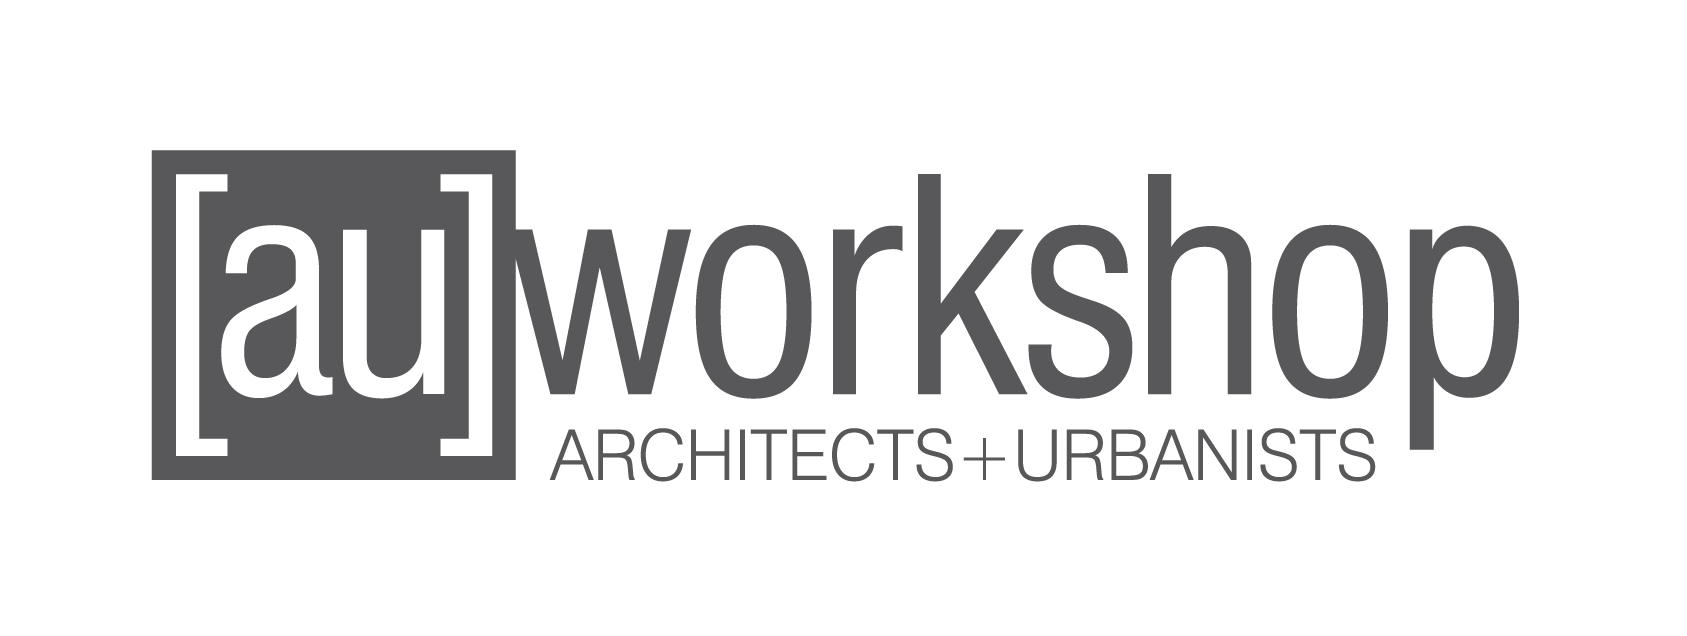 [au]workshop: Architects + Urbanists